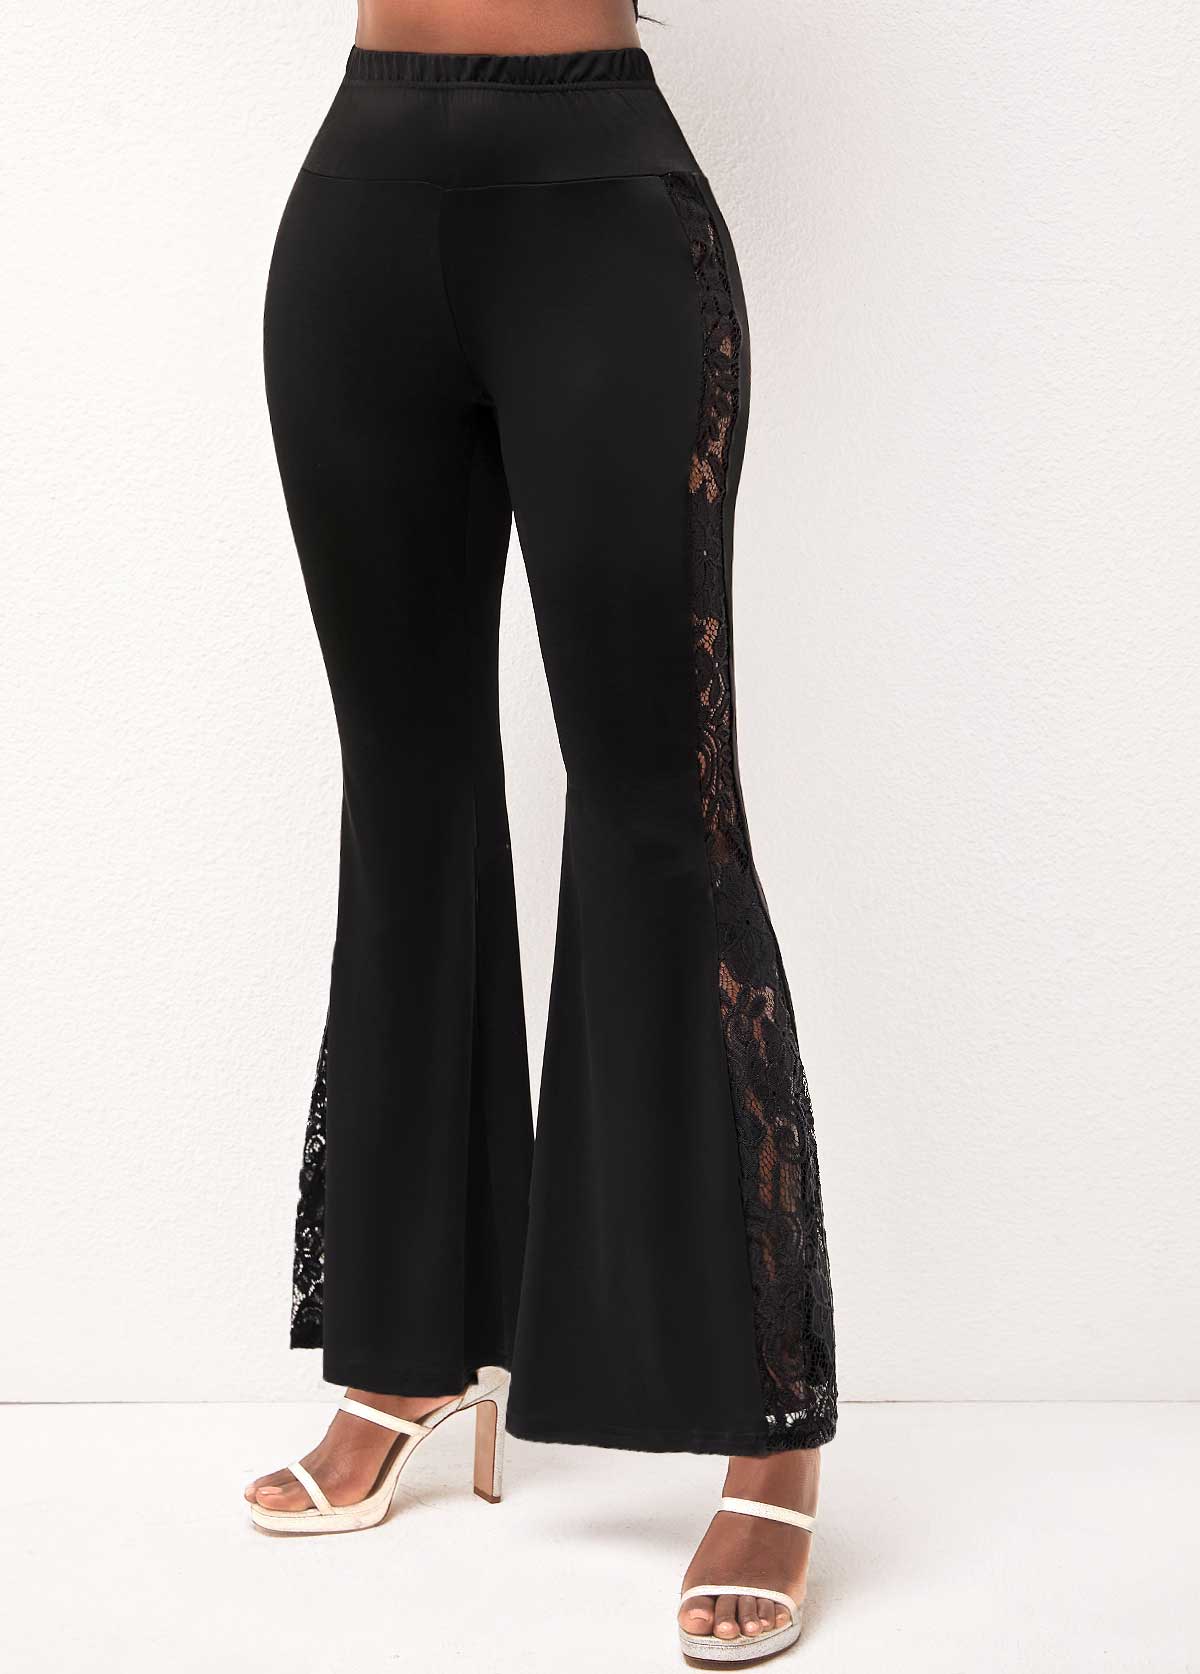 Lace Stitching High Waisted Black Flare Pants